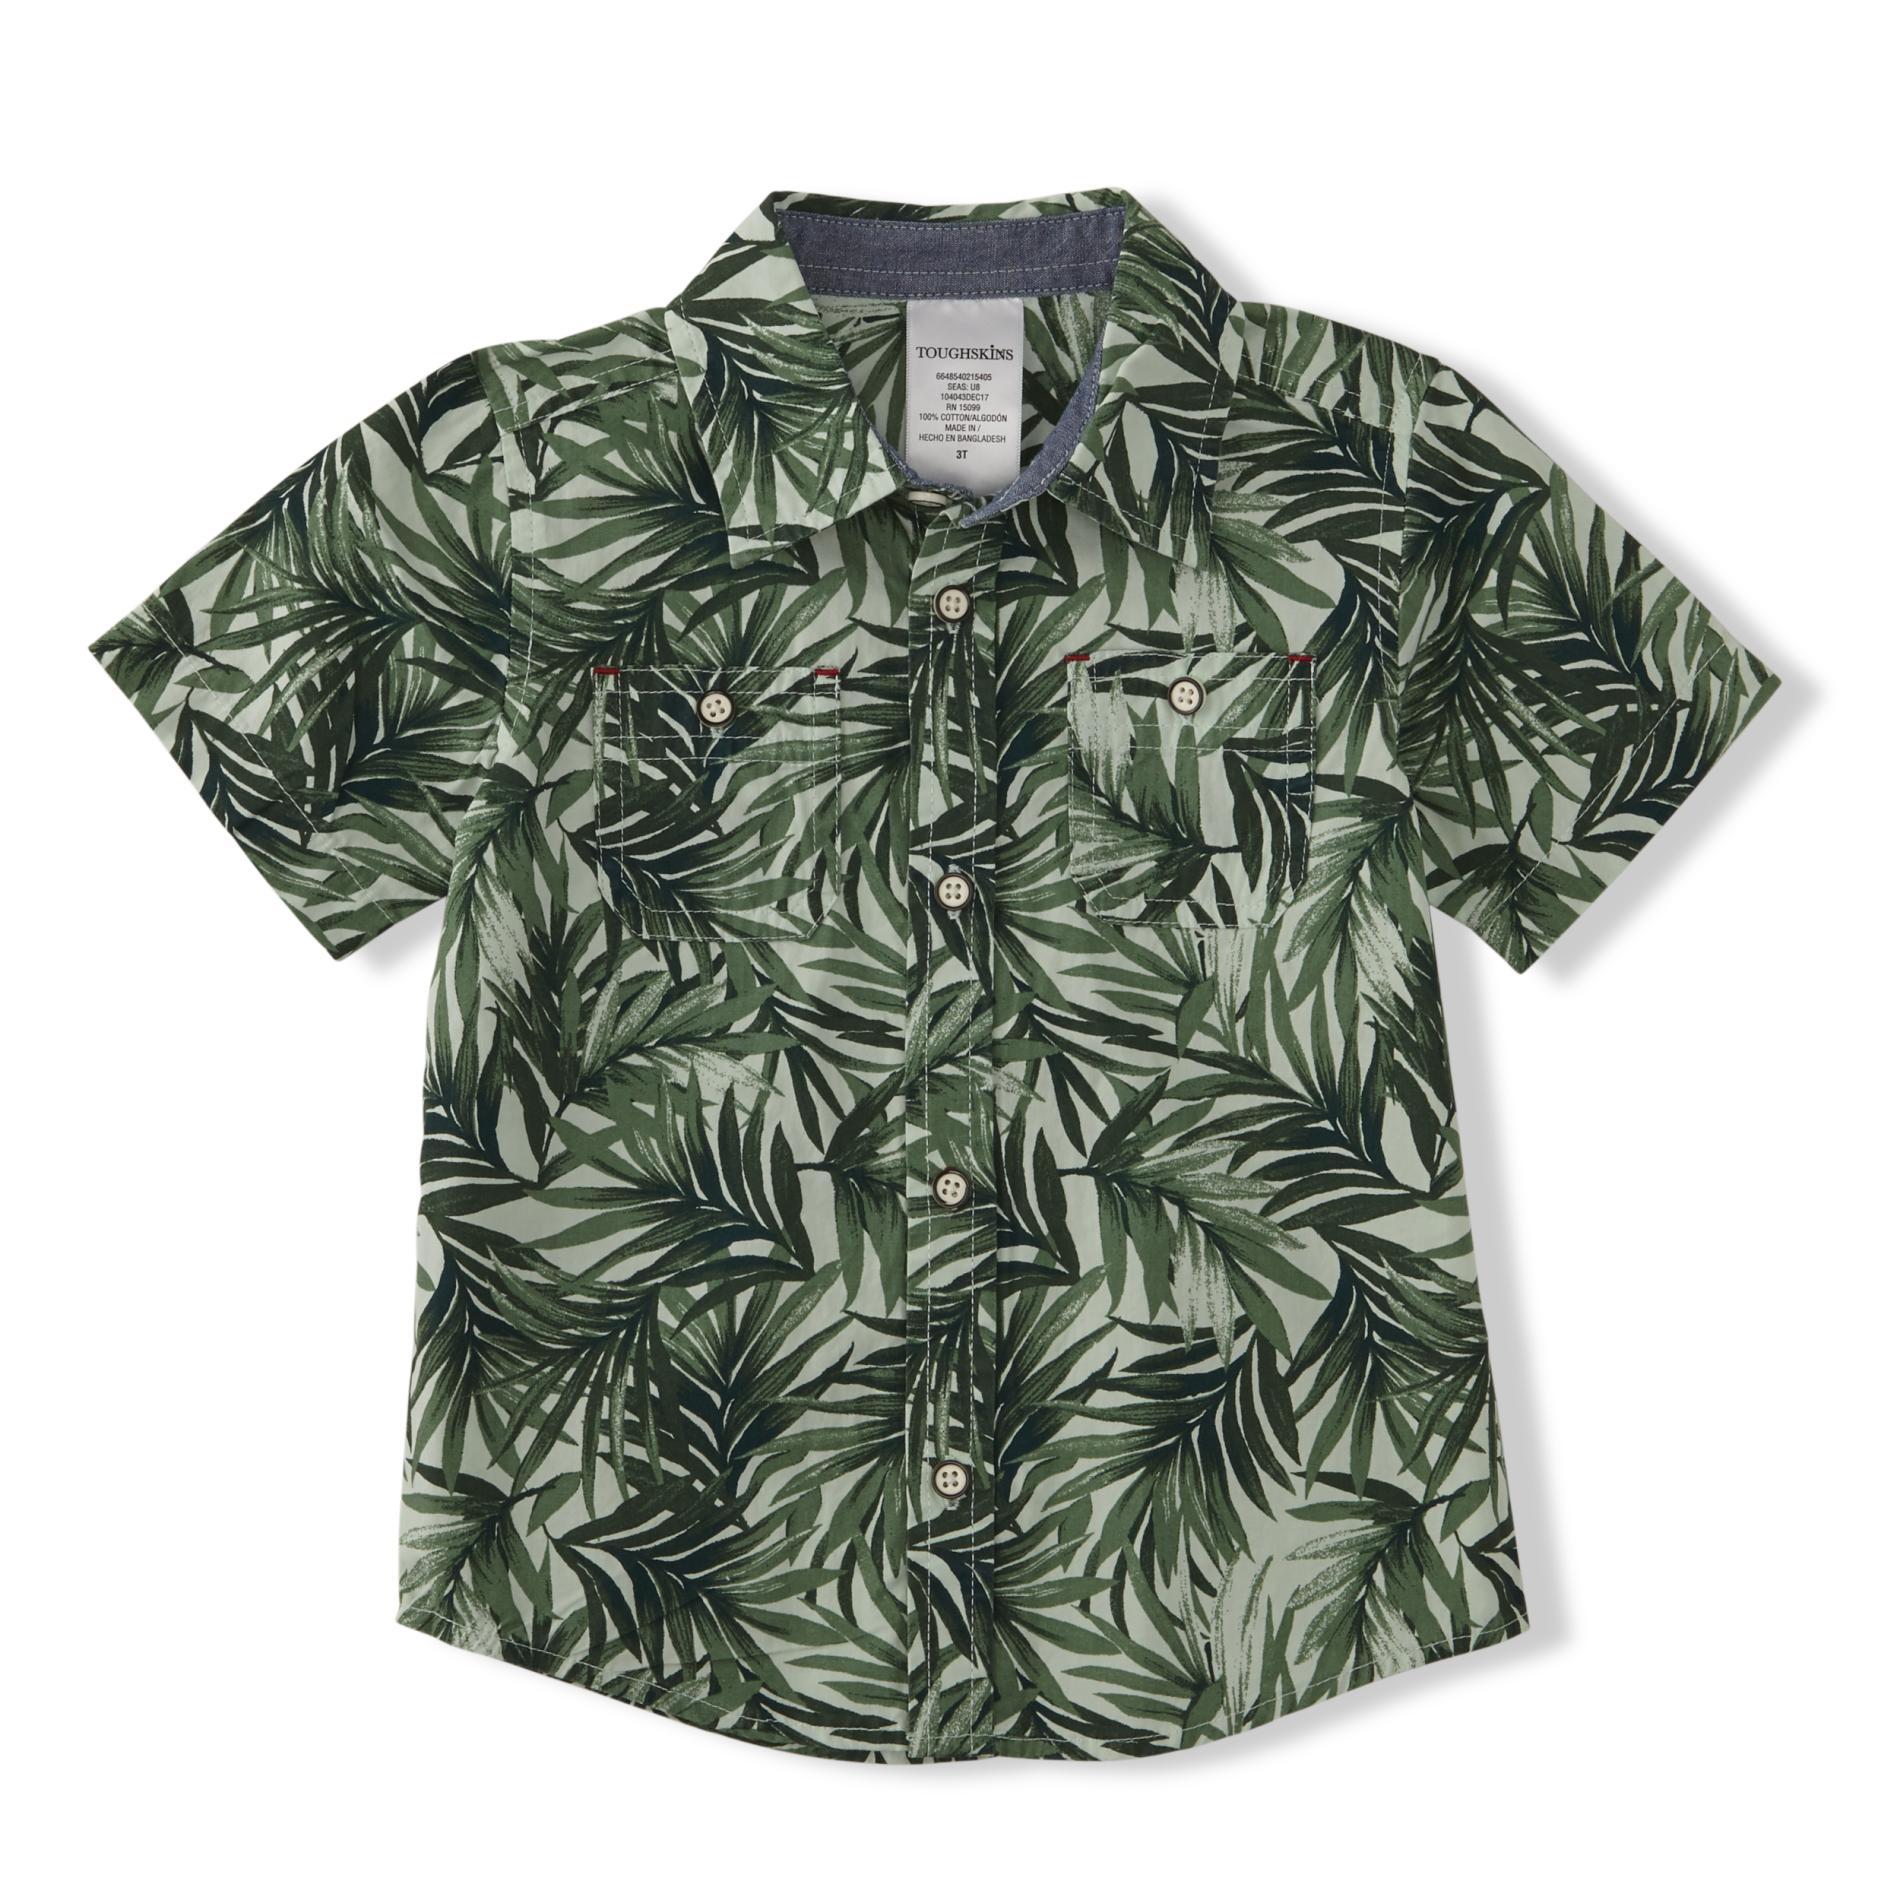 Toughskins Infant & Toddler Boys' Button-Front Shirt - Tropical